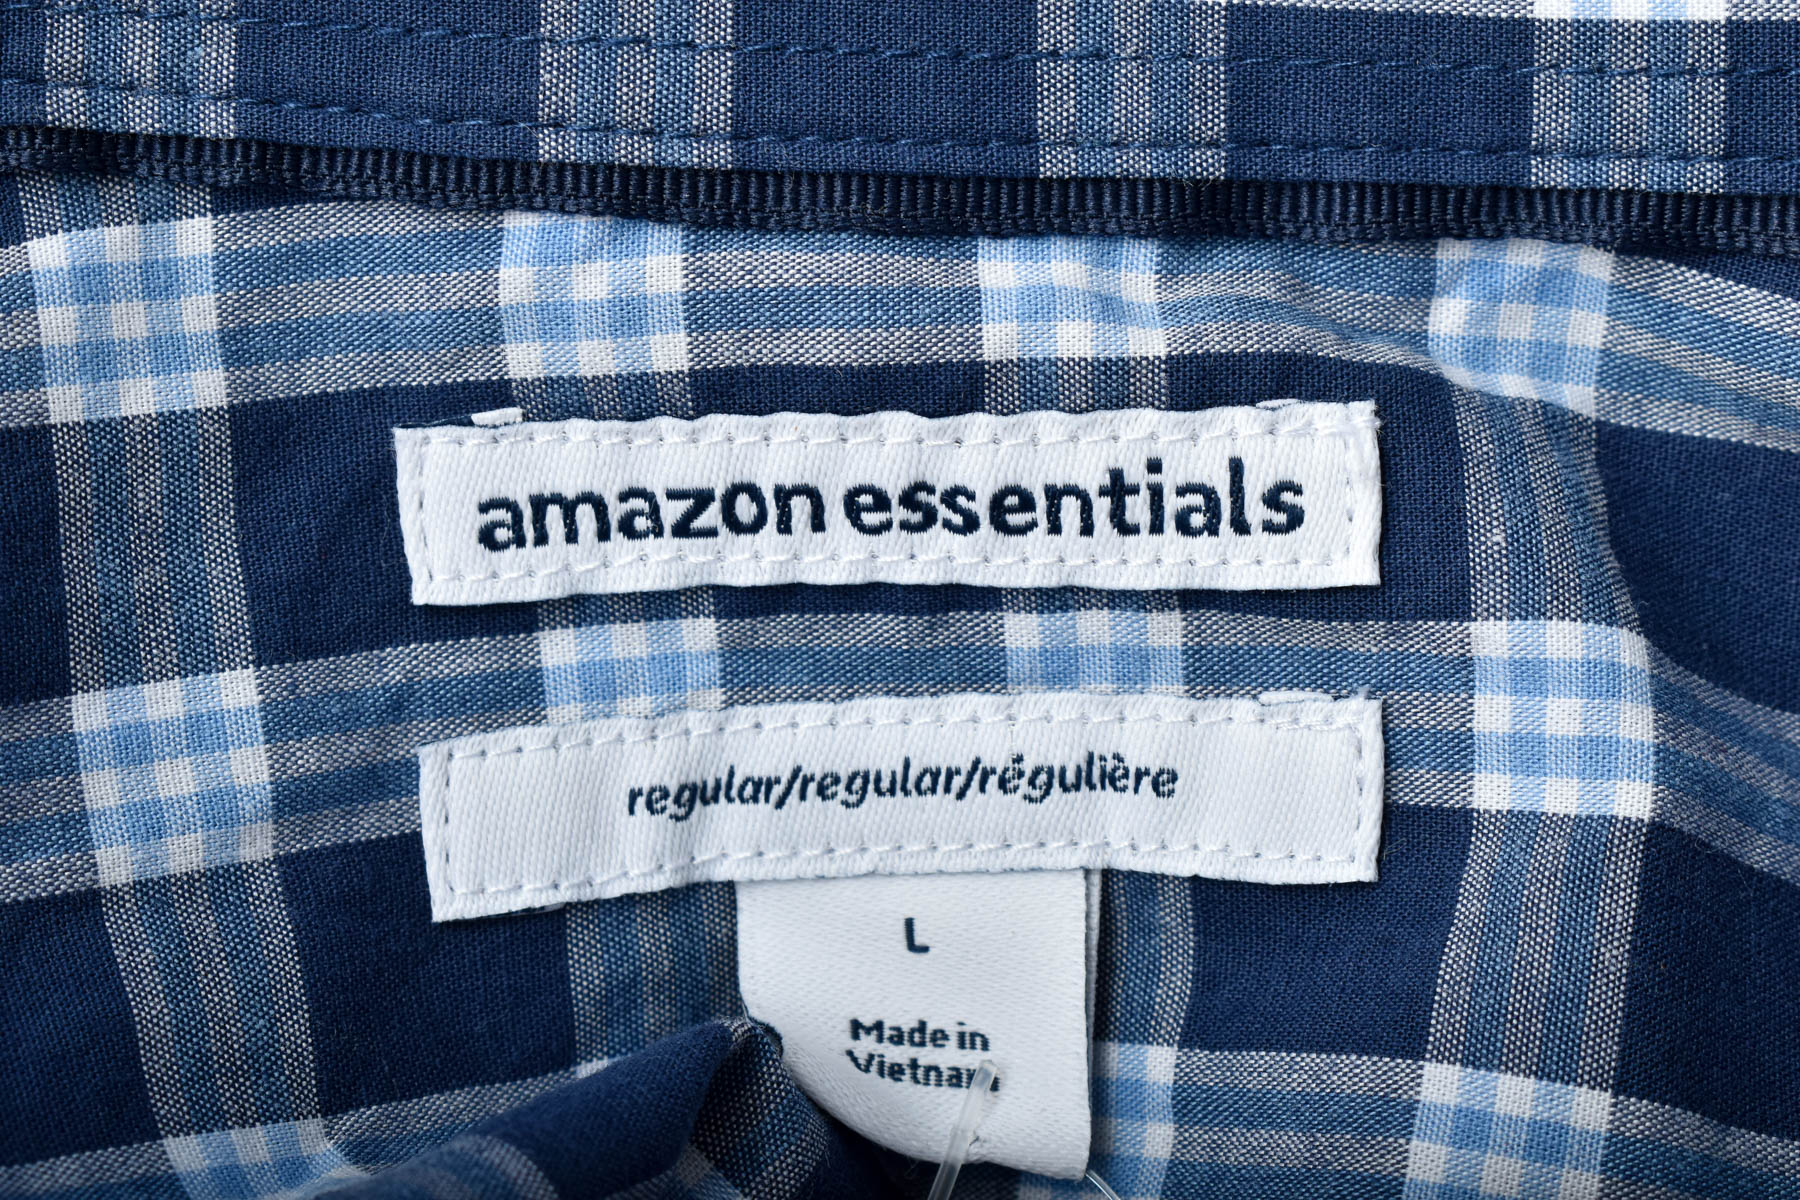 Men's shirt - Amazon essentials - 2